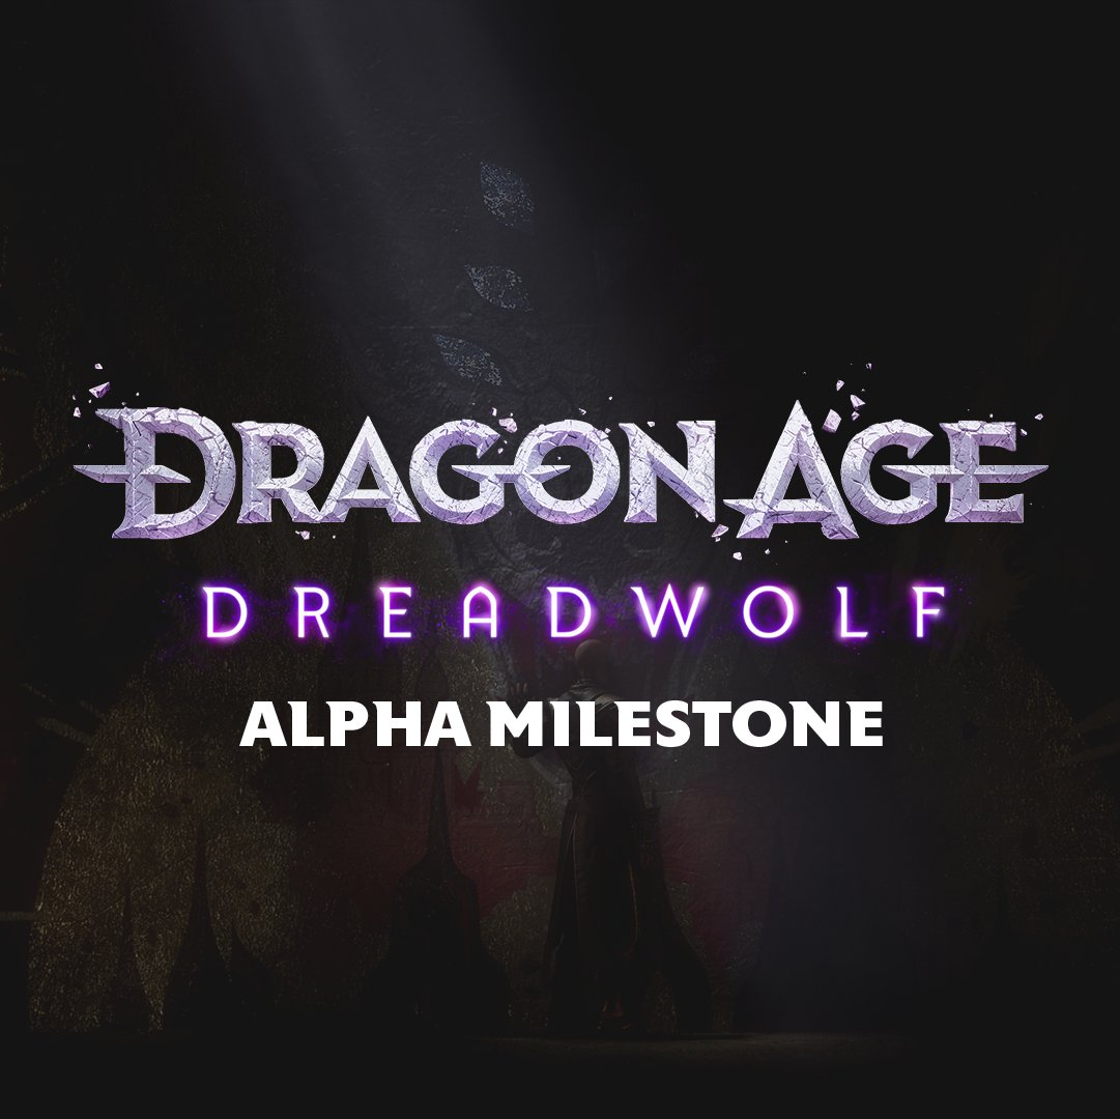 Dragon Age: Dreadwolf achève sa phase Alpha